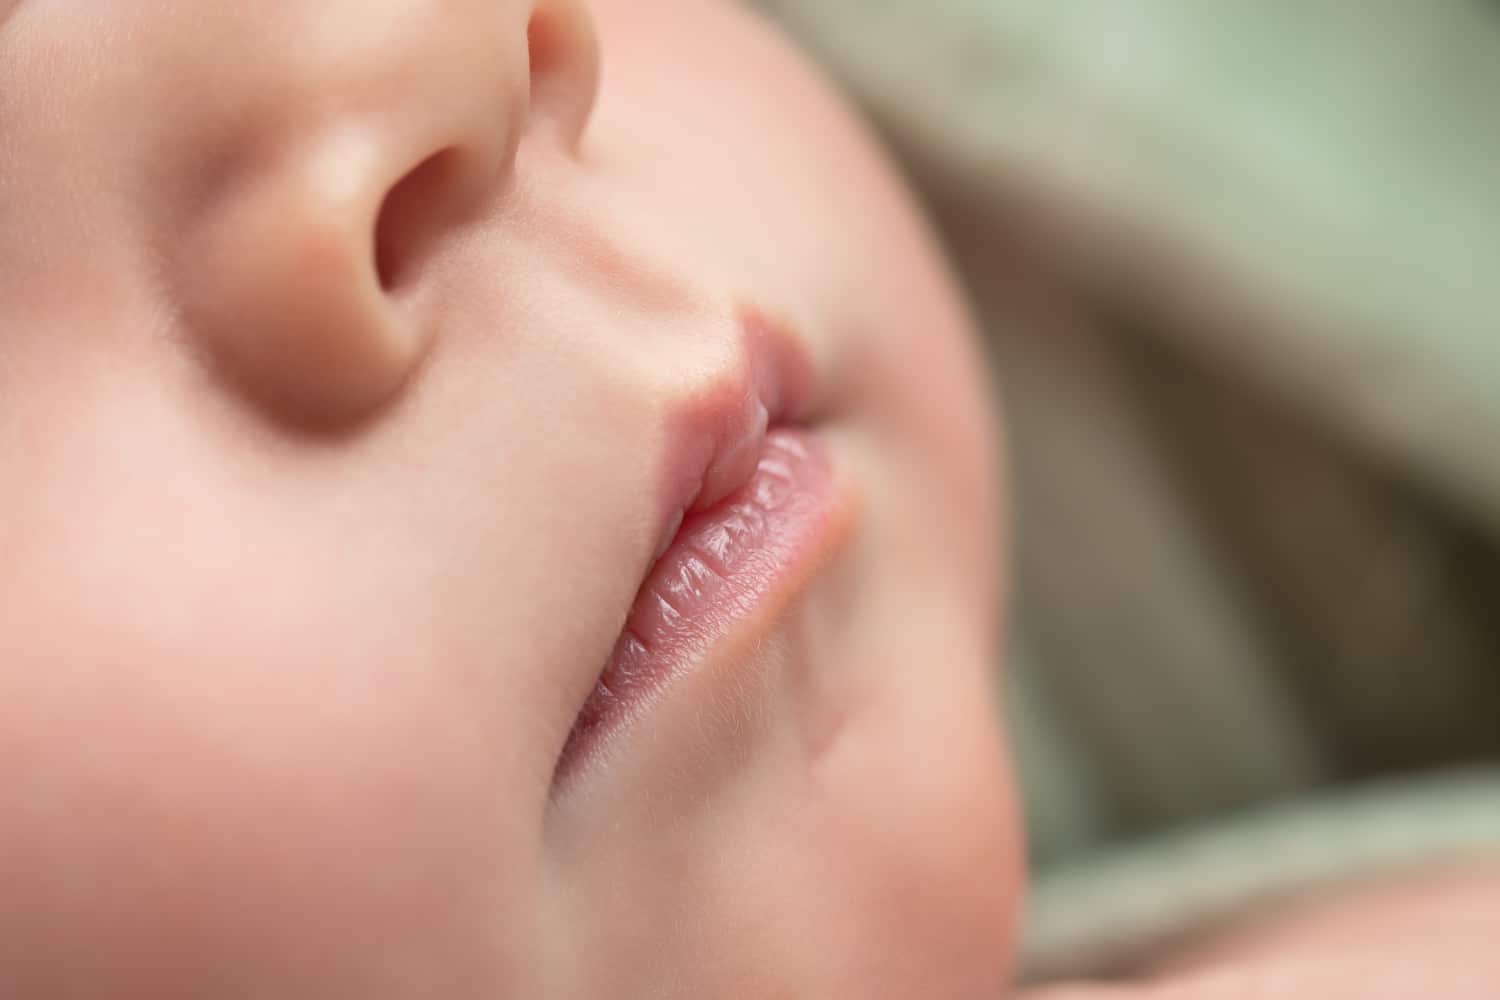 newborn photographer in rochester ny captures macros image of newborn baby boy's lips